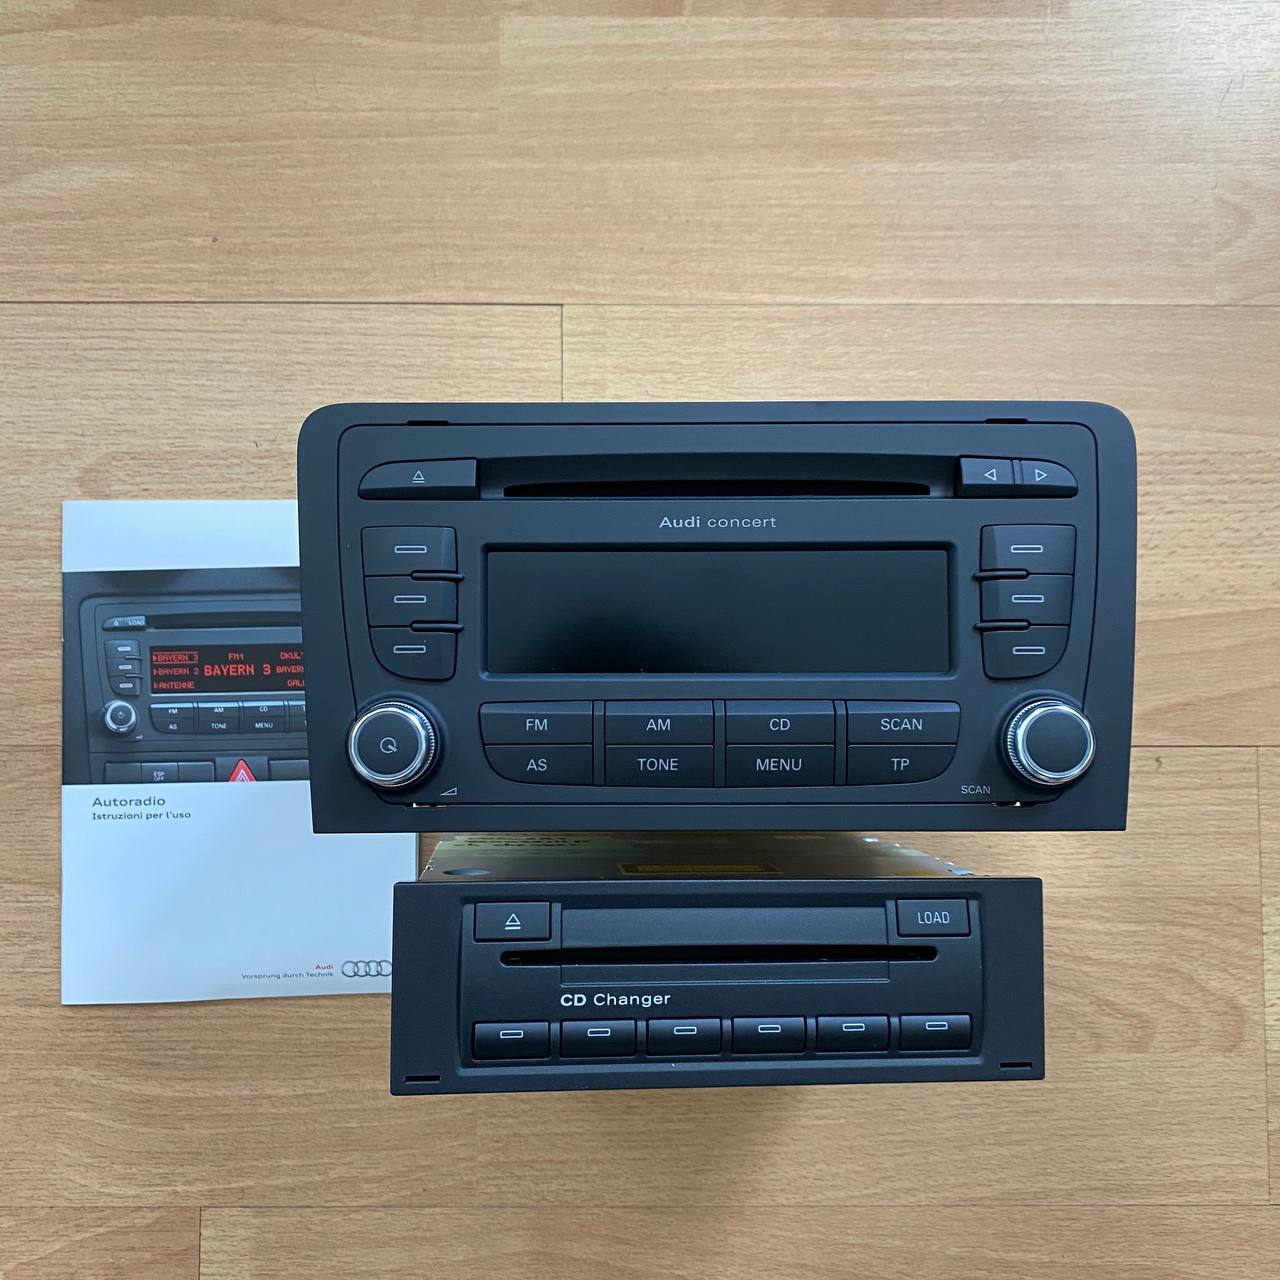 Autoradio Concert Audi lettore cd/mp3 + Caricatore cd changer